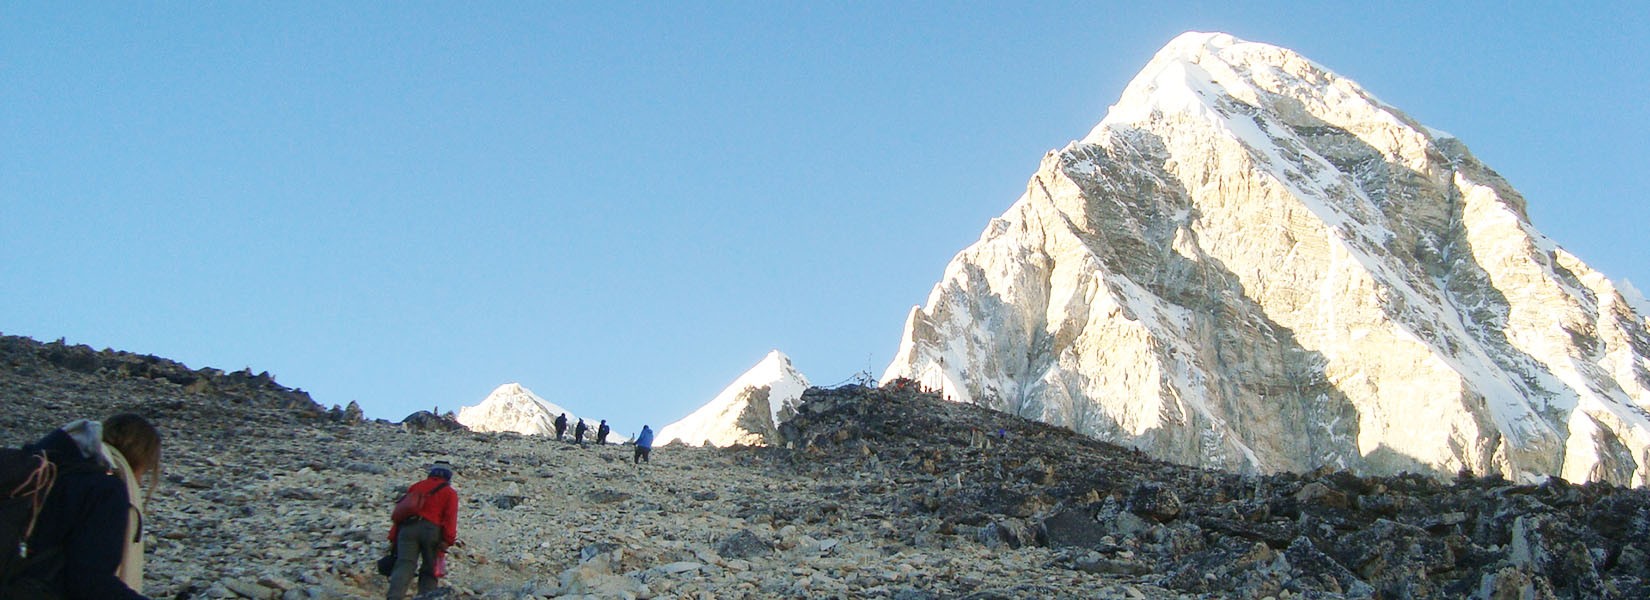 Trek In Nepal